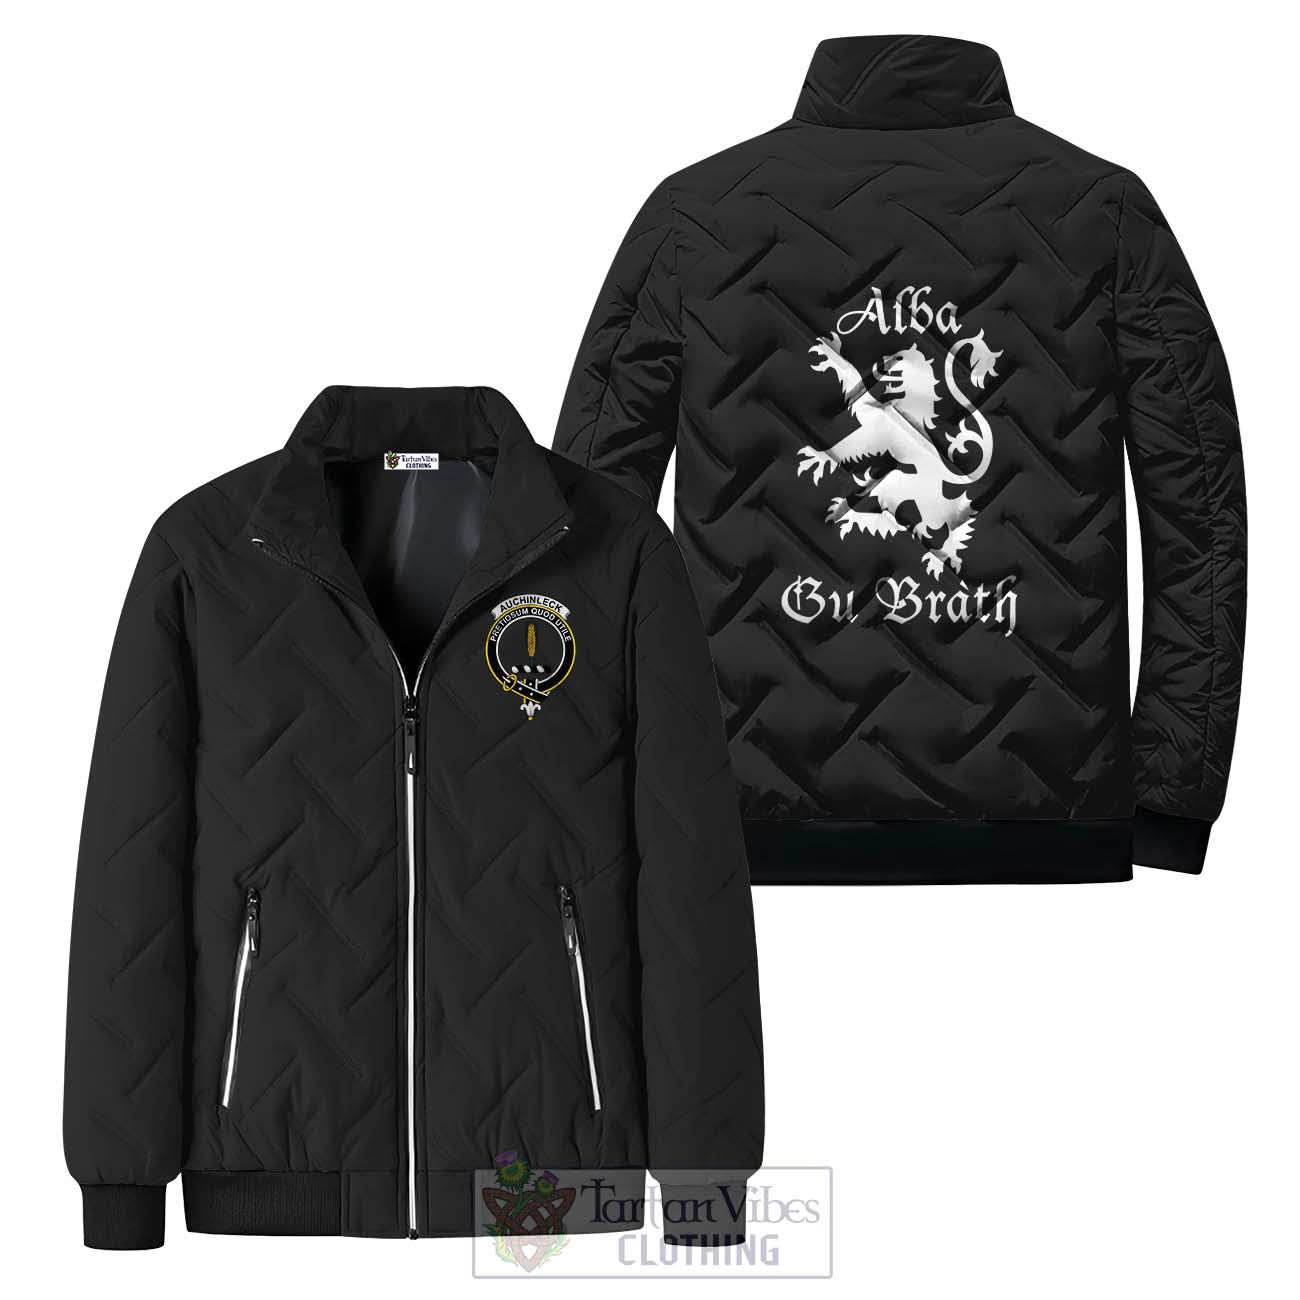 Tartan Vibes Clothing Auchinleck Family Crest Padded Cotton Jacket Lion Rampant Alba Gu Brath Style